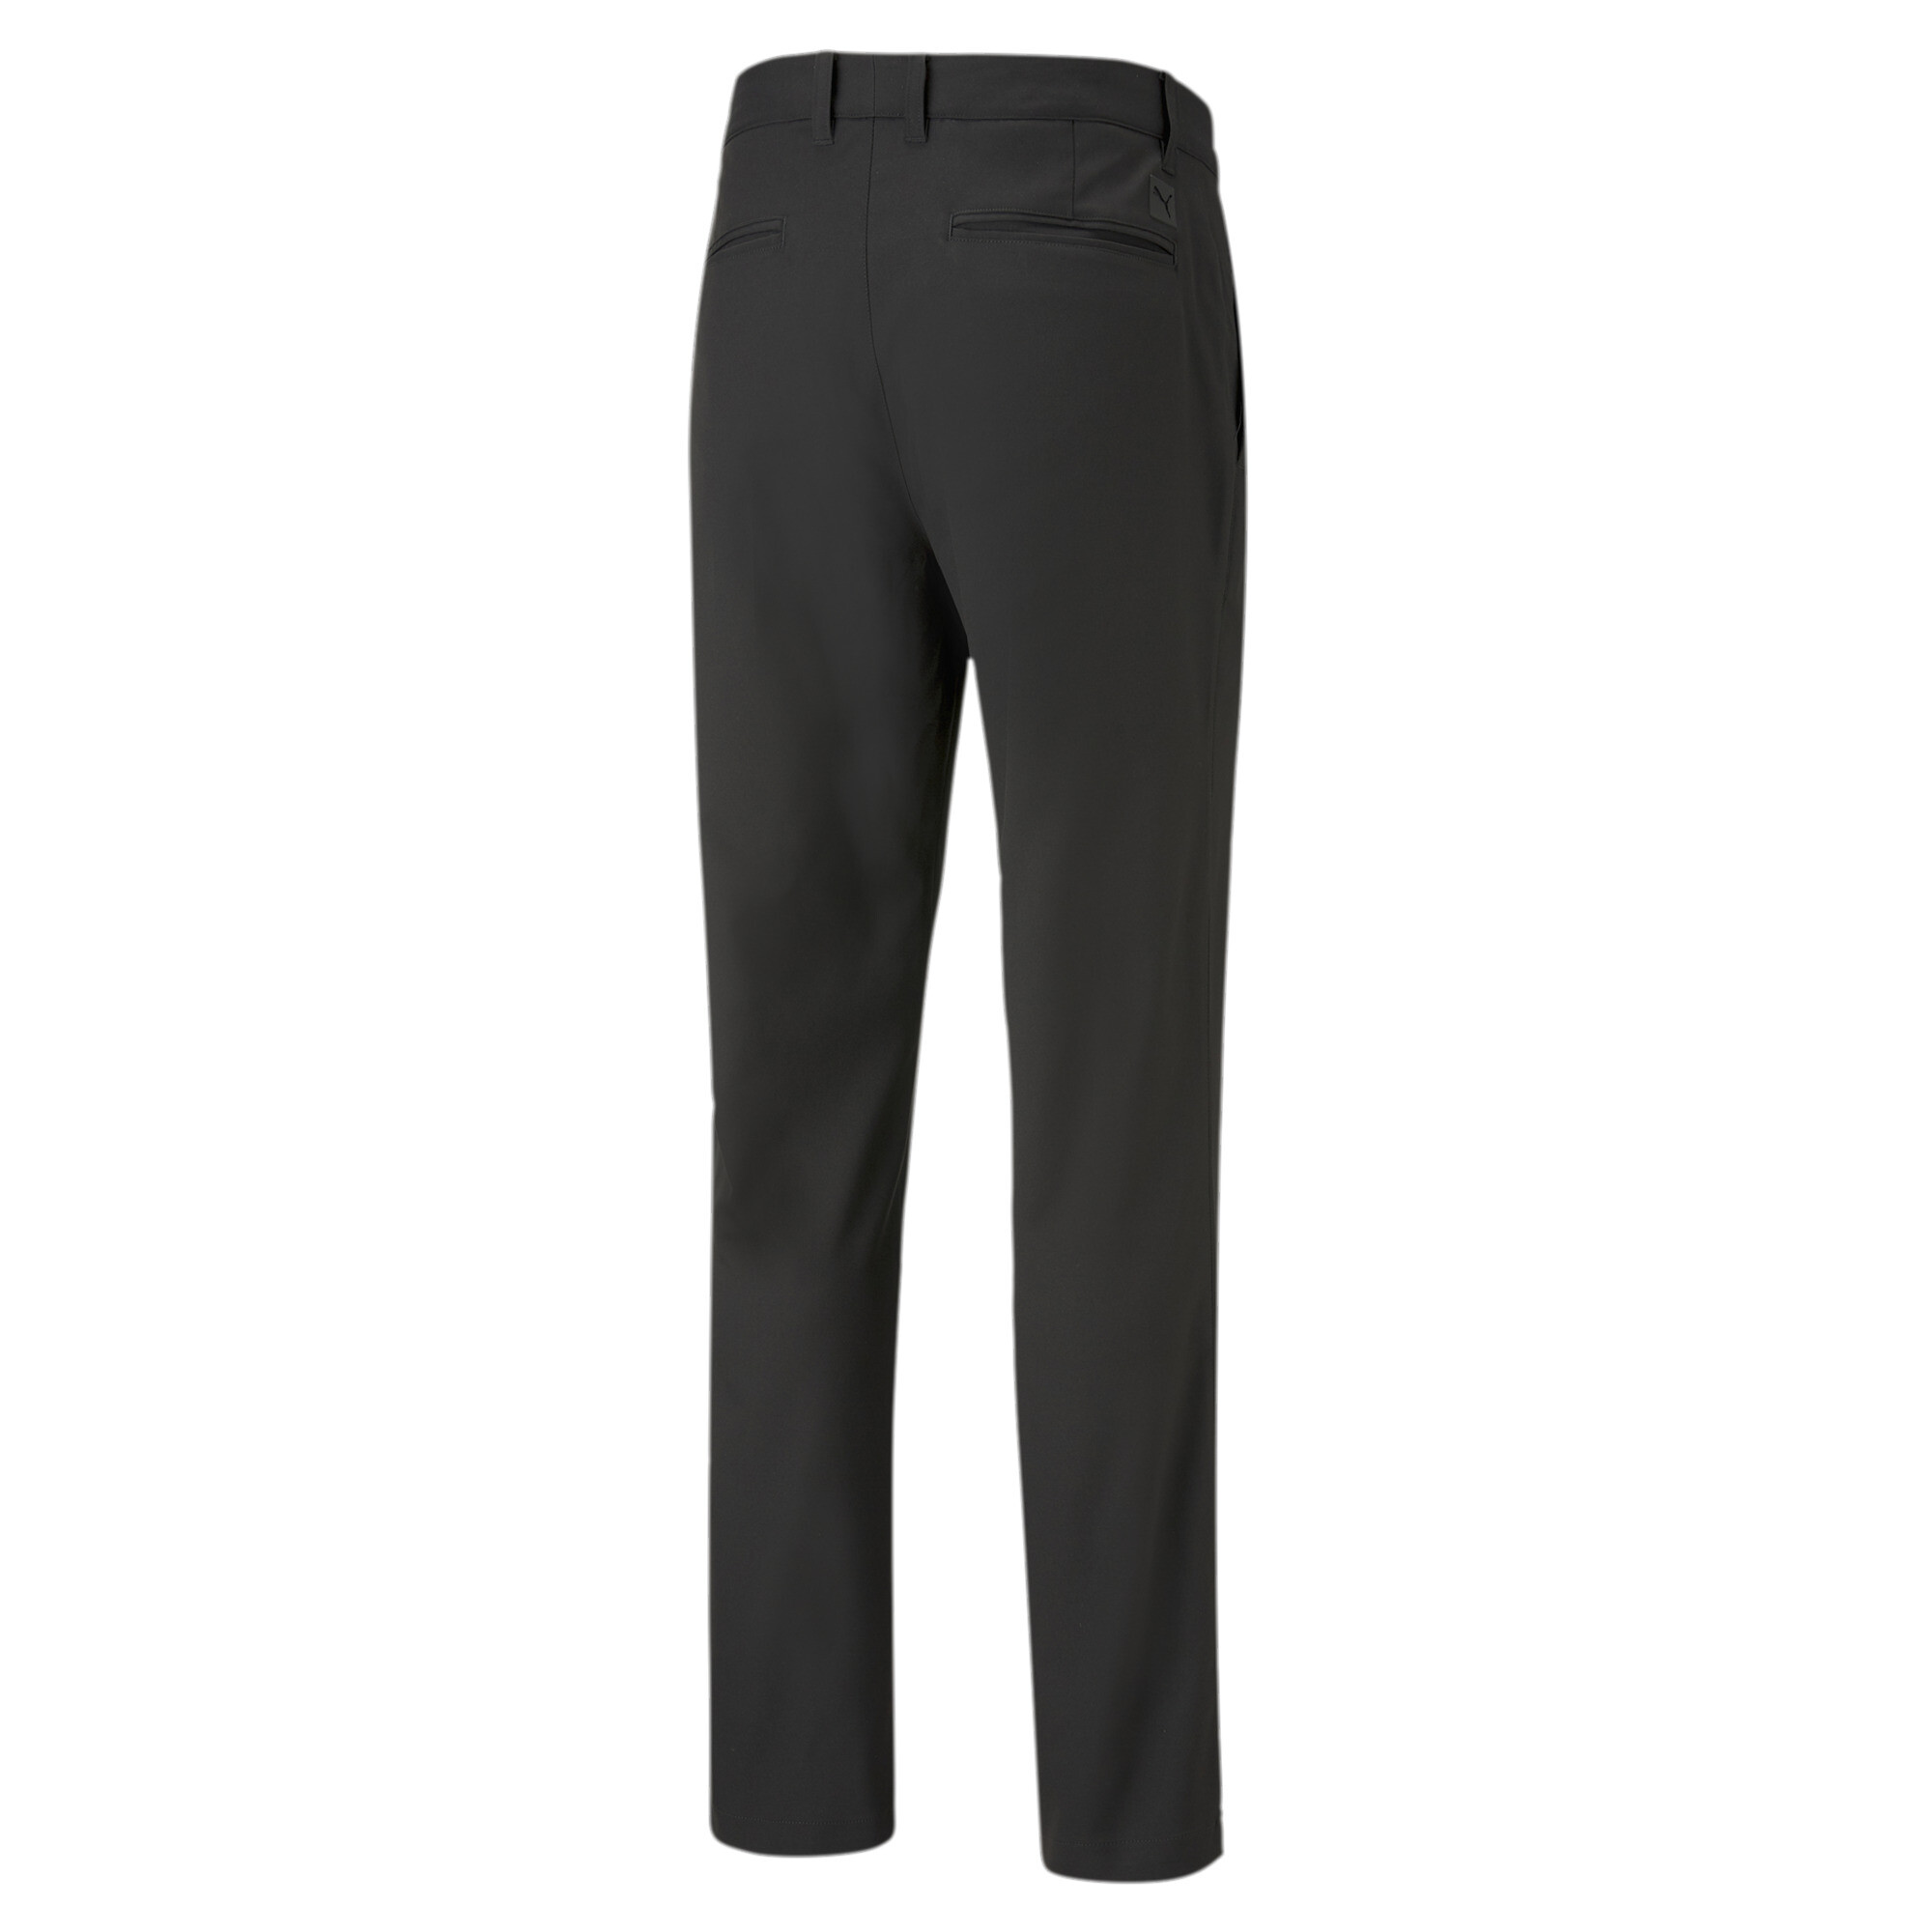 Men's Puma Dealer Golf Pants, Black, Size 36/34, Clothing